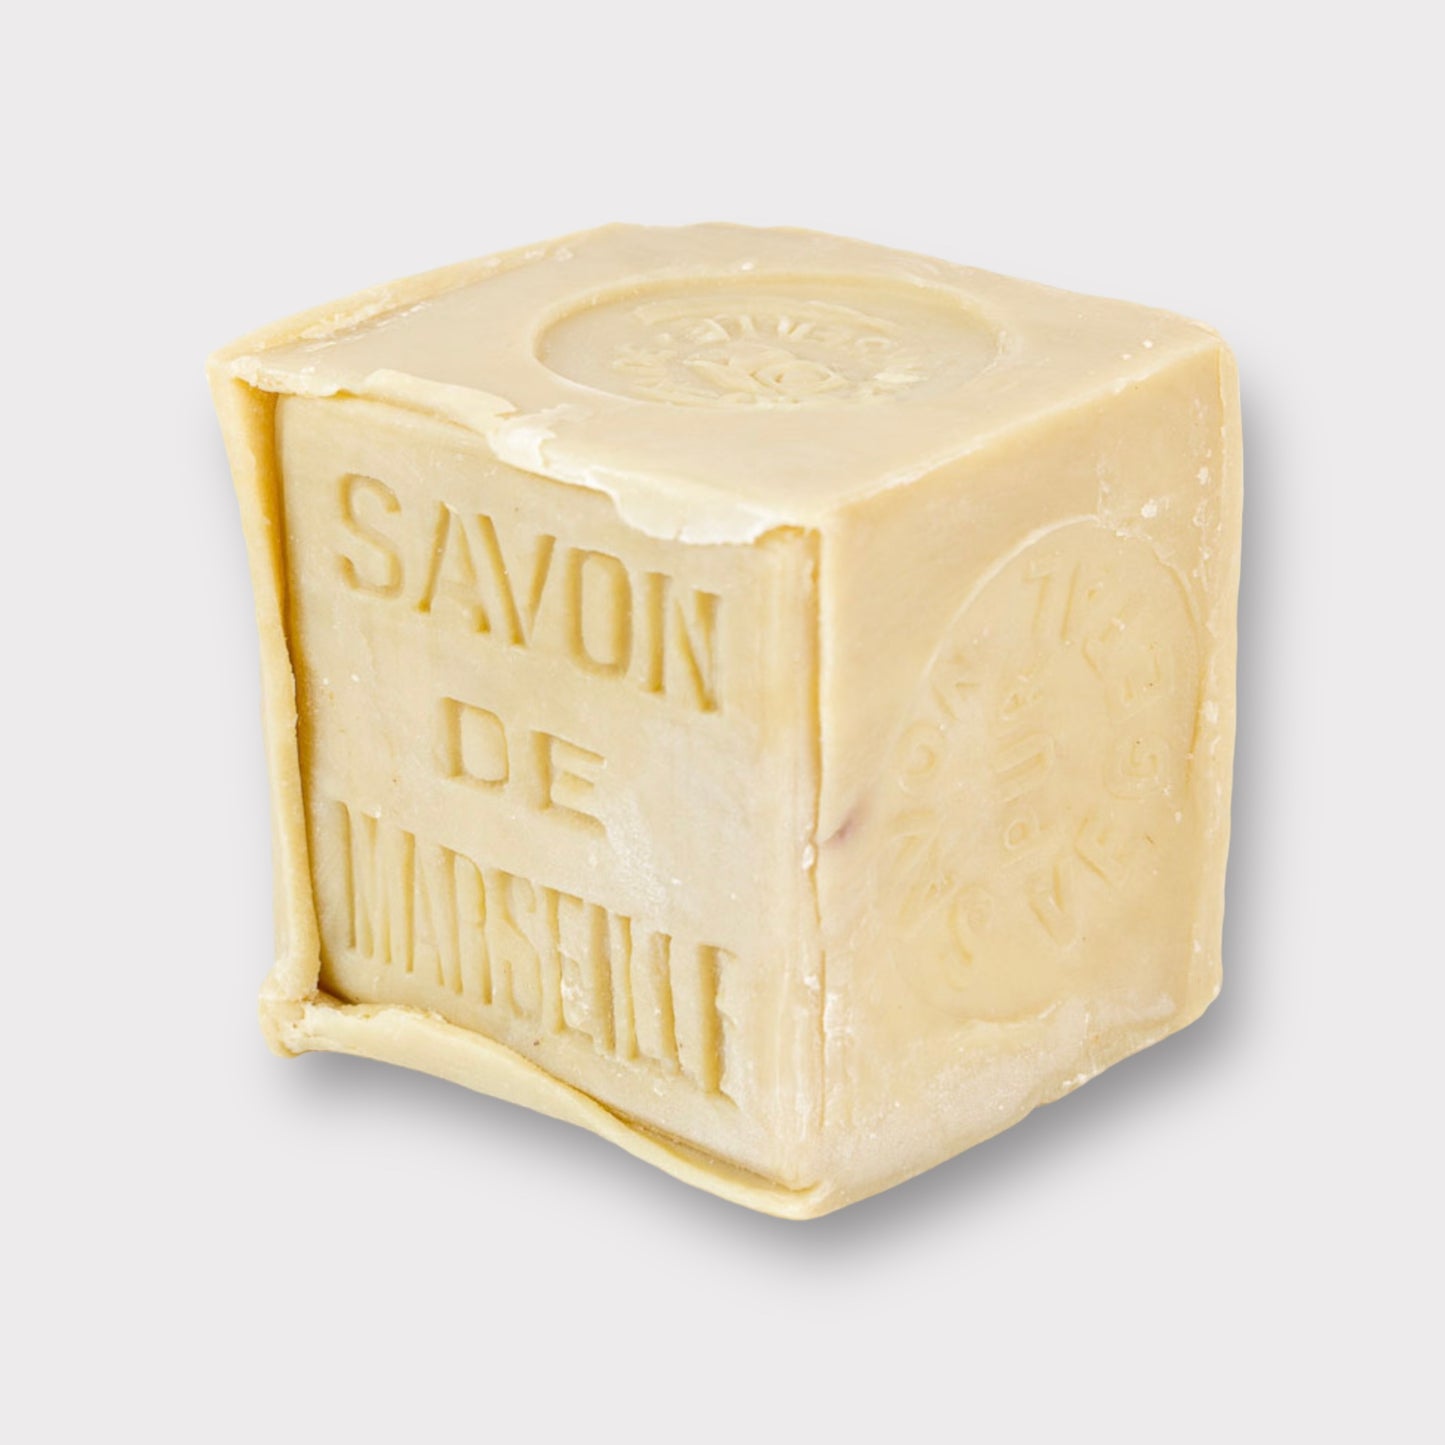 Authentic Marseille soap cube 600g – Coconut Oil